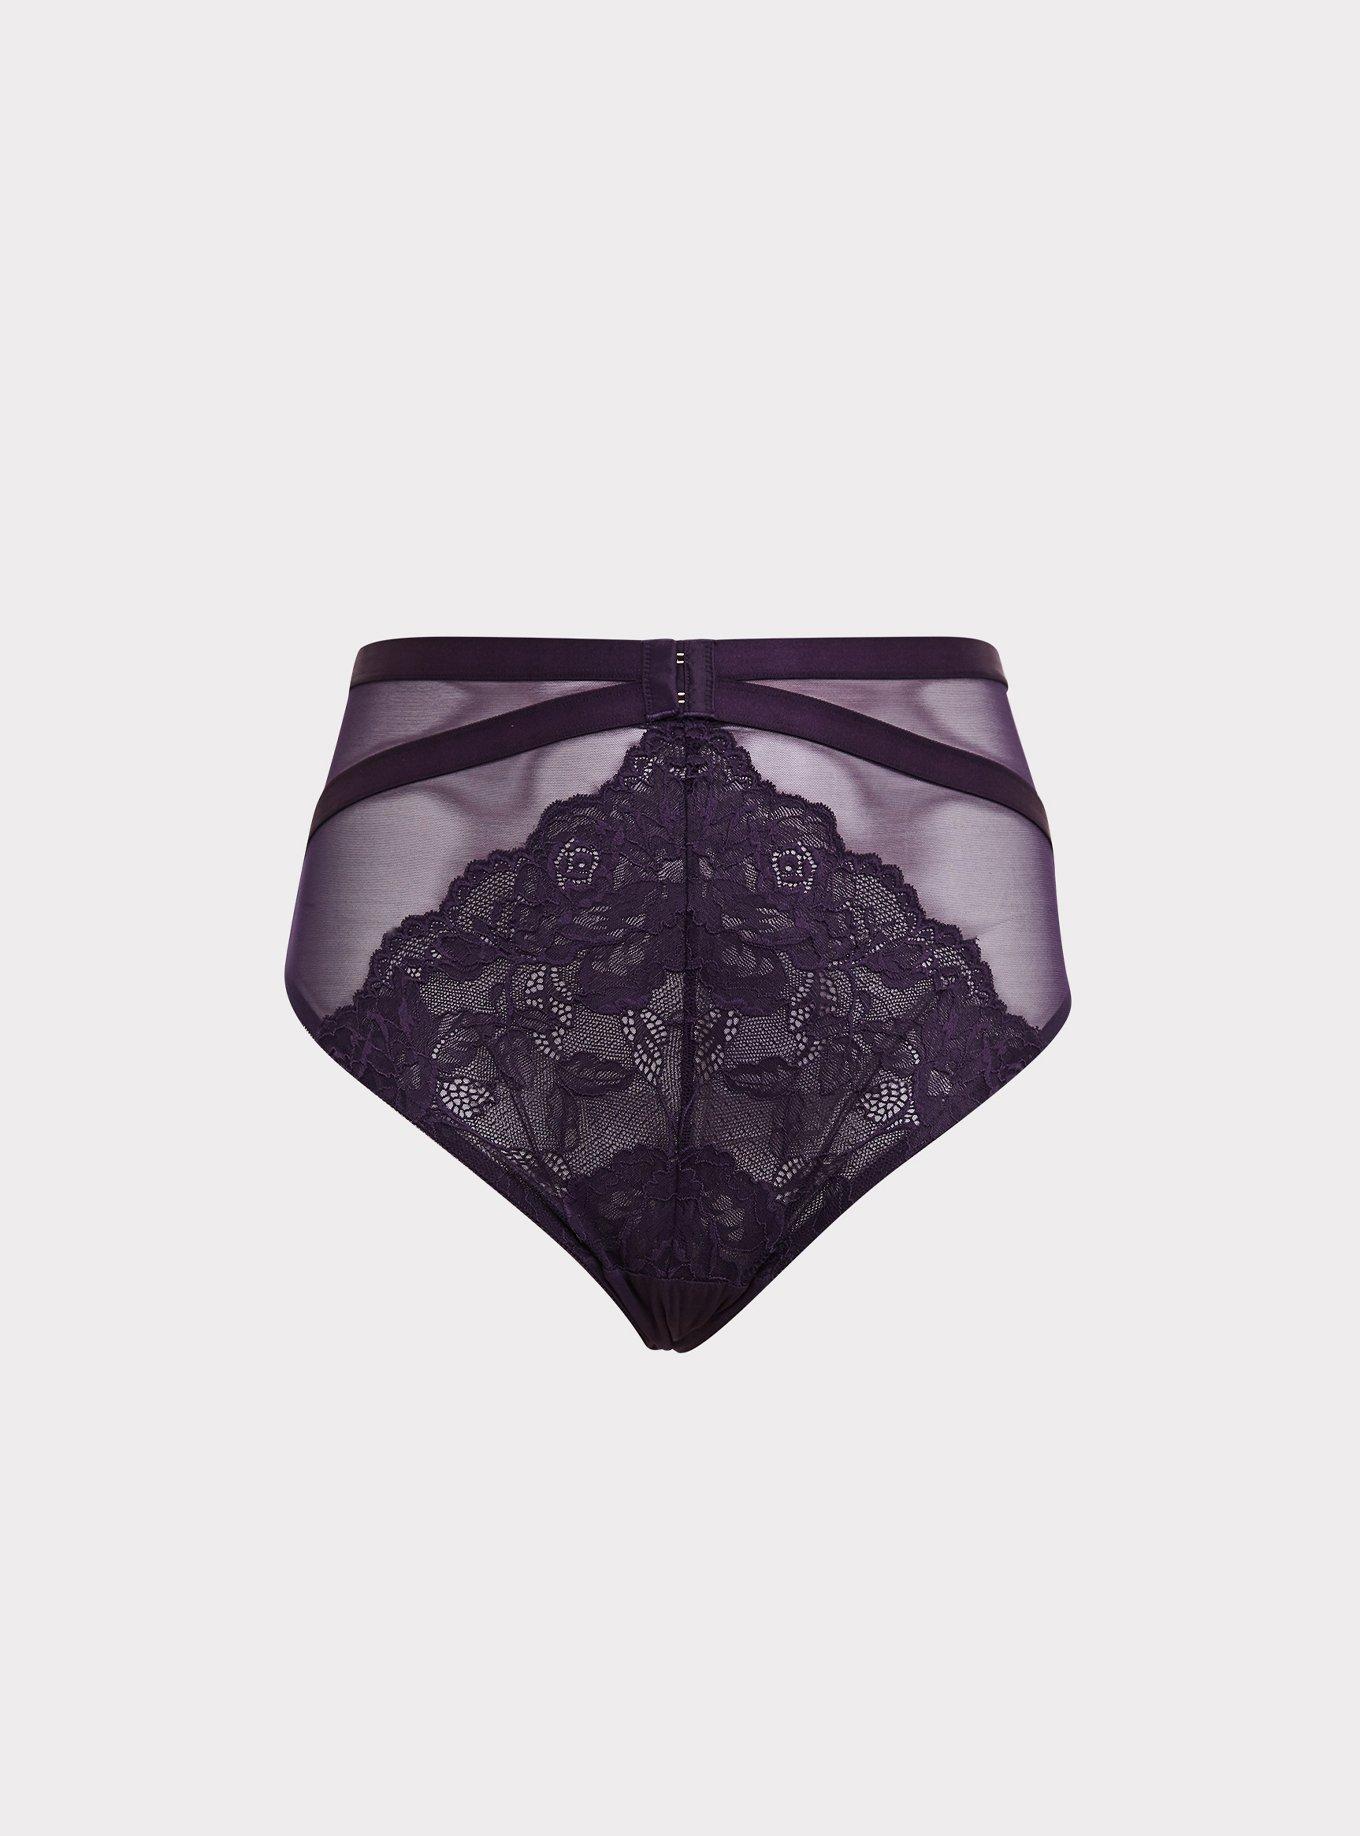 Plus Size - Dark Purple Mesh & Lace High Waist Thong Panty - Torrid